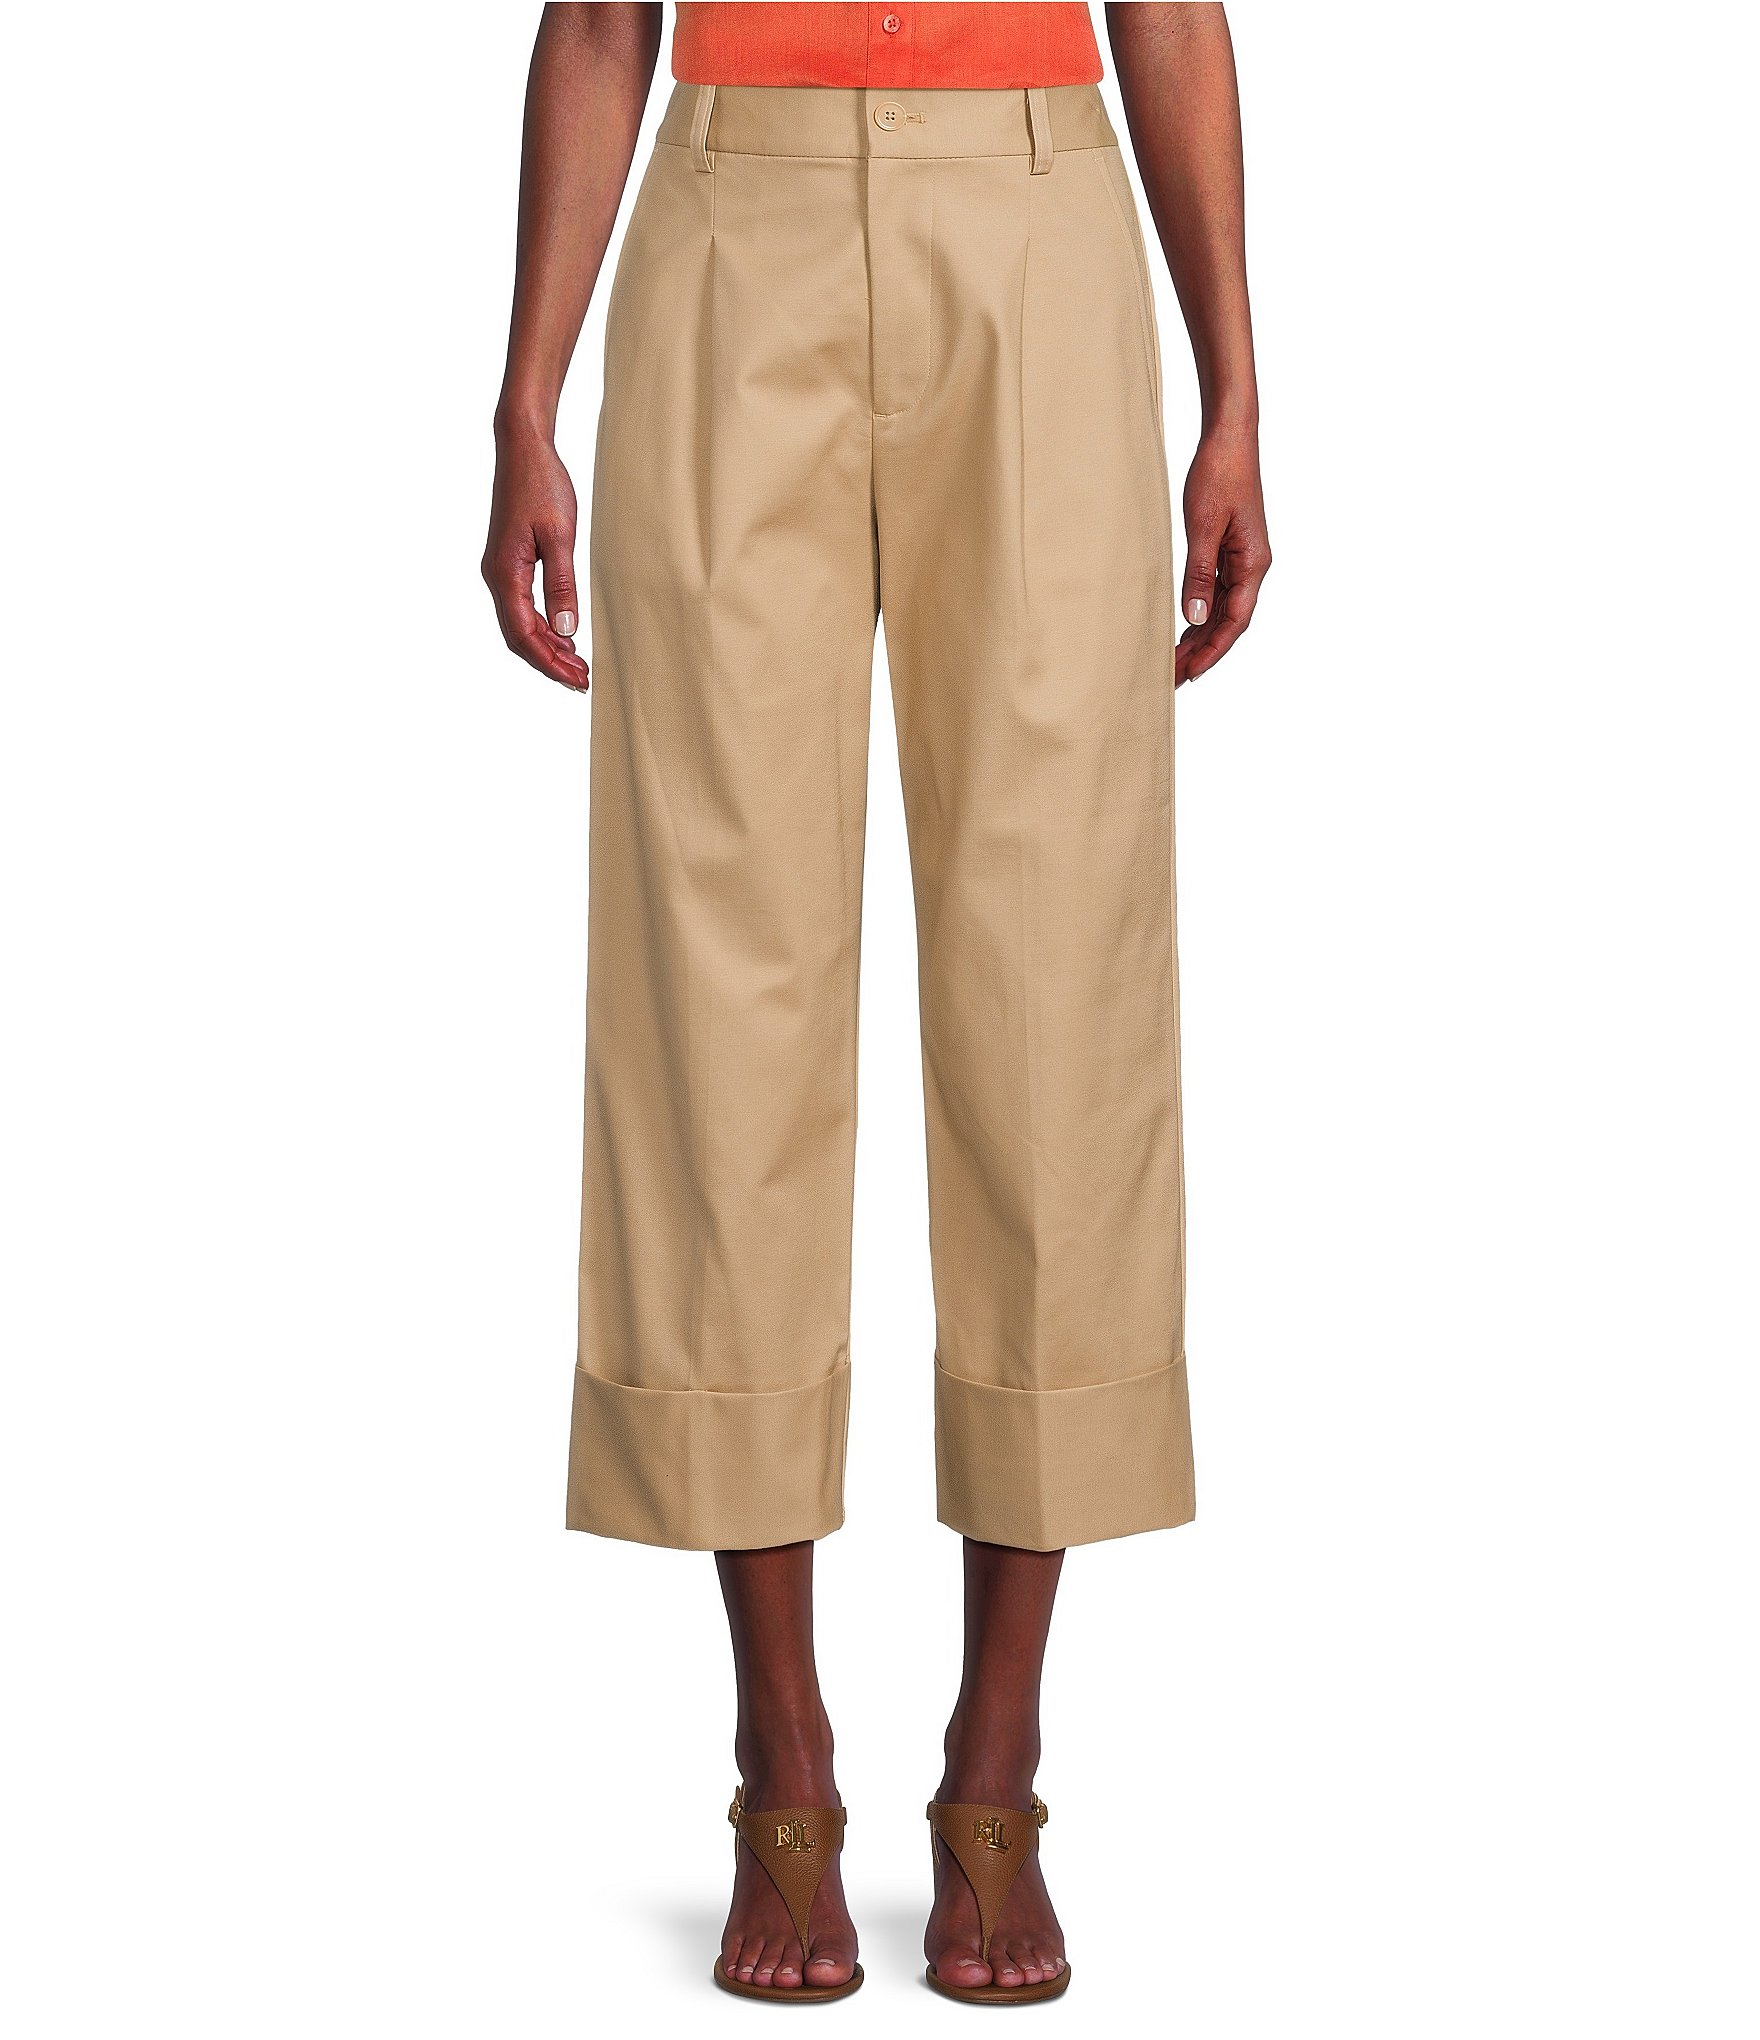 Polo Ralph Lauren Classic Fit Newport Corduroy Pants, $98, Dillard's